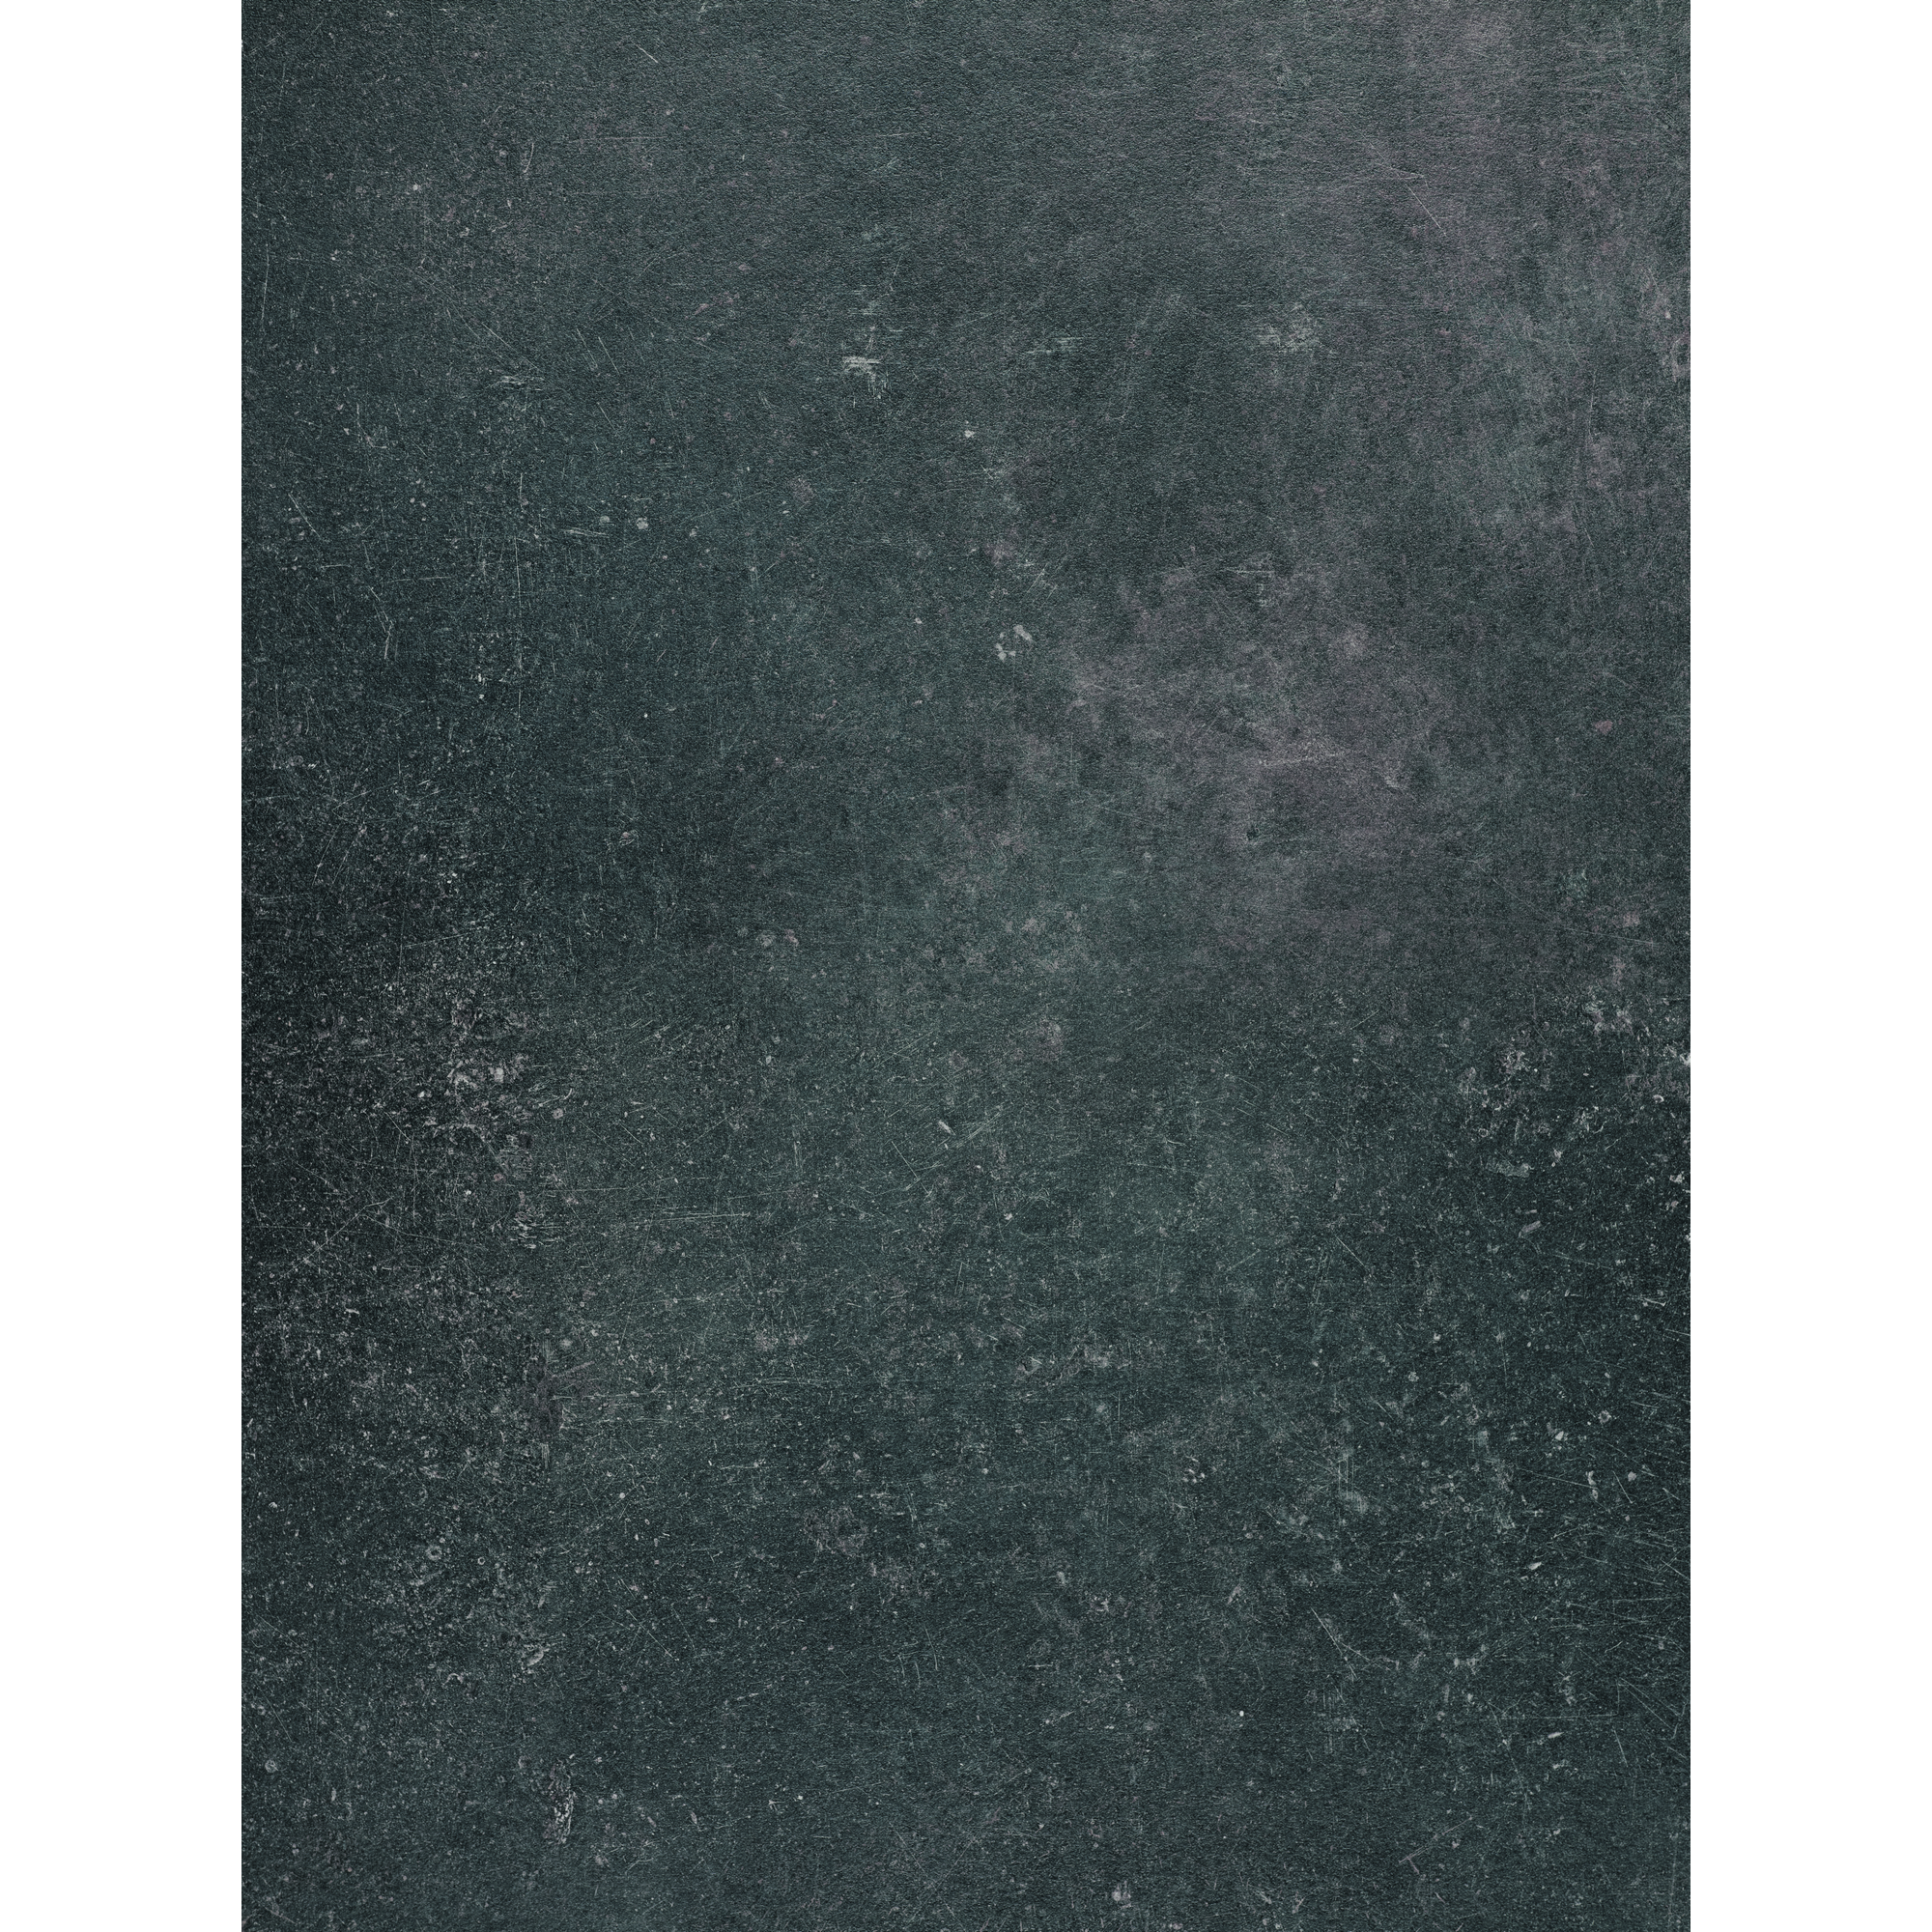 Arbeitsplatte 'Marmor Astrato' dunkelgrau 4100 x 600 x 38 mm + product picture